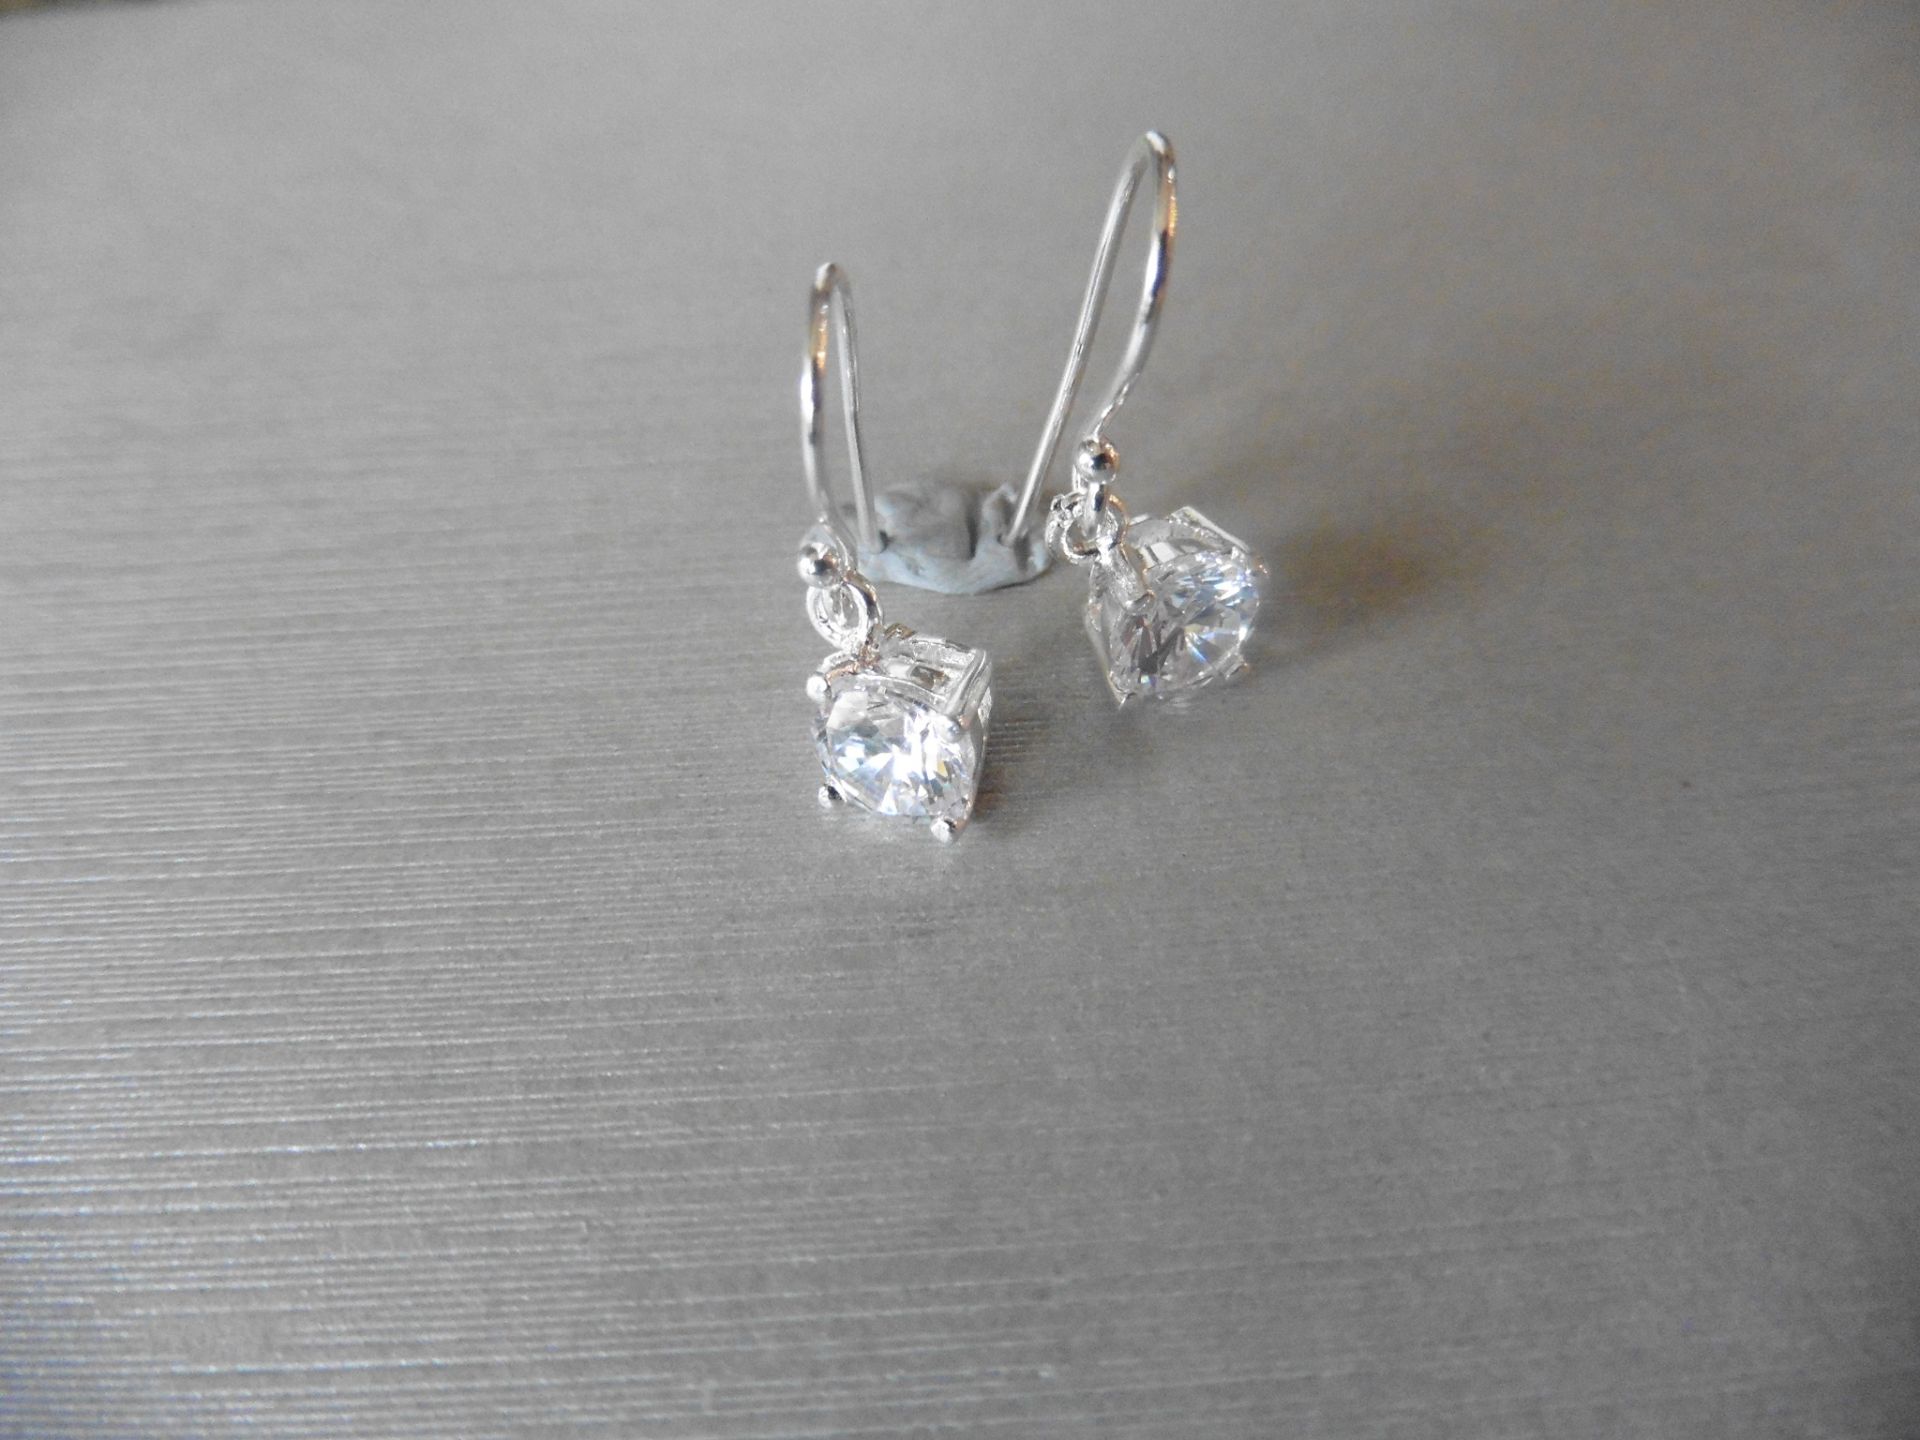 0.80ct diamond drop style solitaire earrings each set with a brilliant cut diamond, I colour, Si2